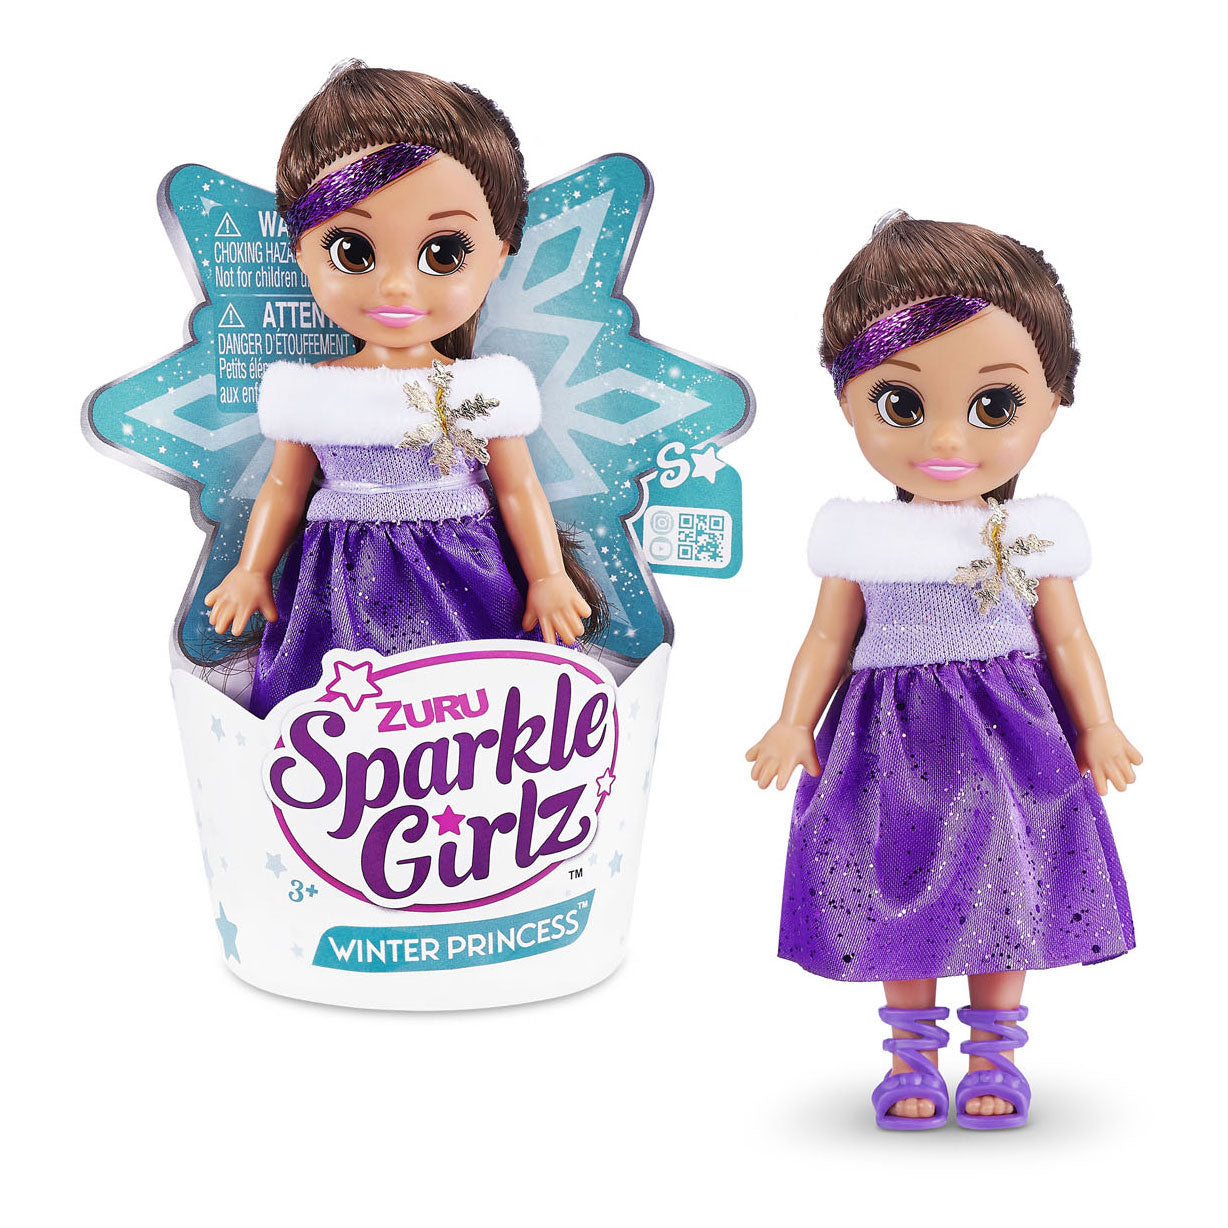 Zuru Sparkle Girlz Winter Princess Cupcake